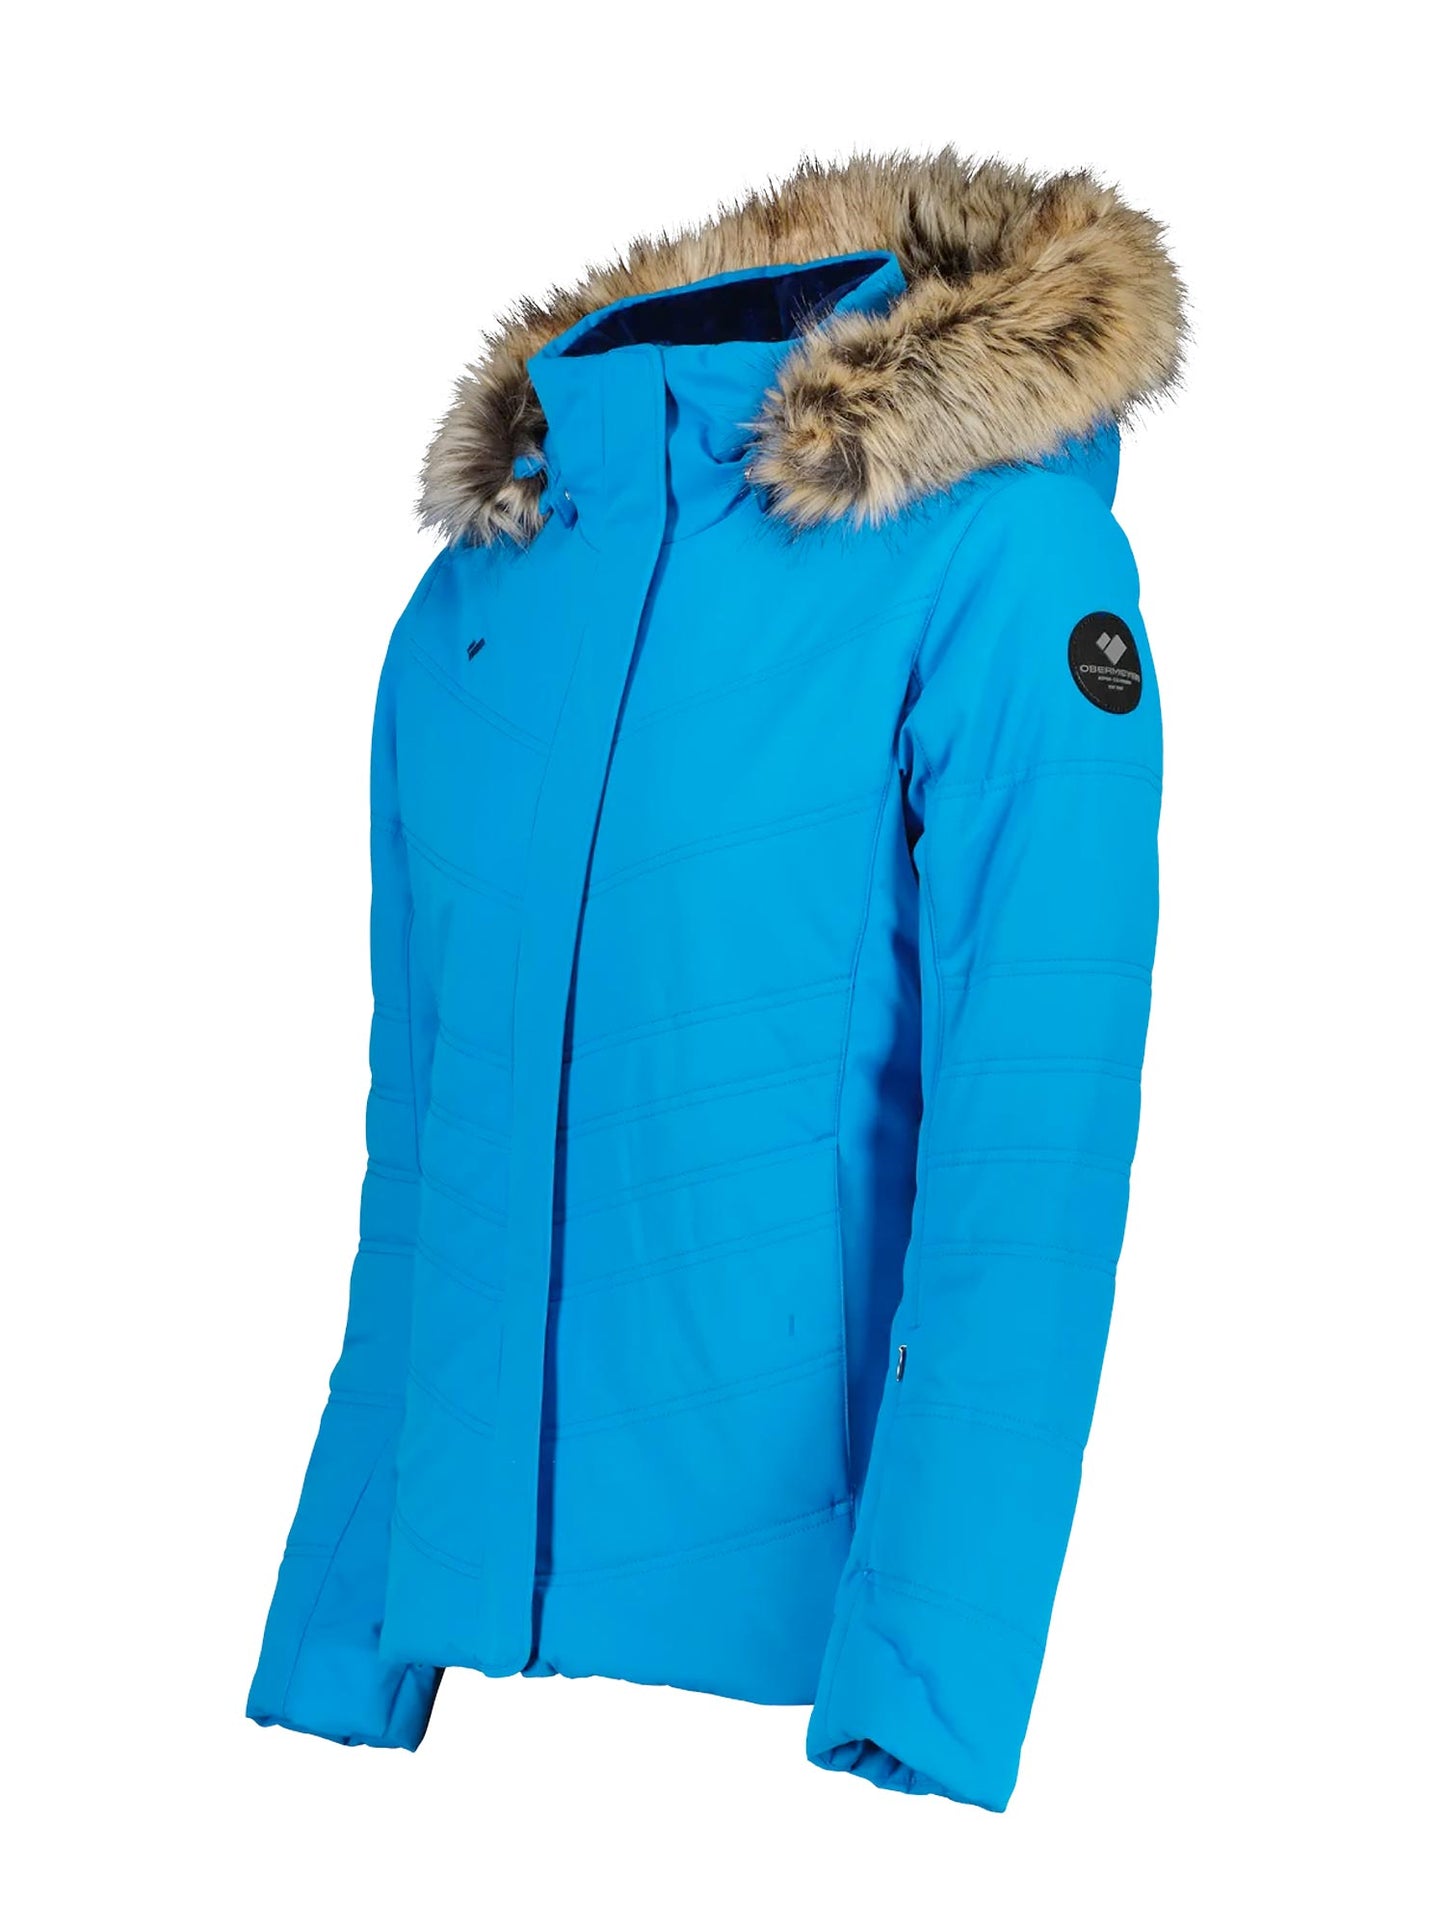 women's ski jacket, bright blue with faux fur hood